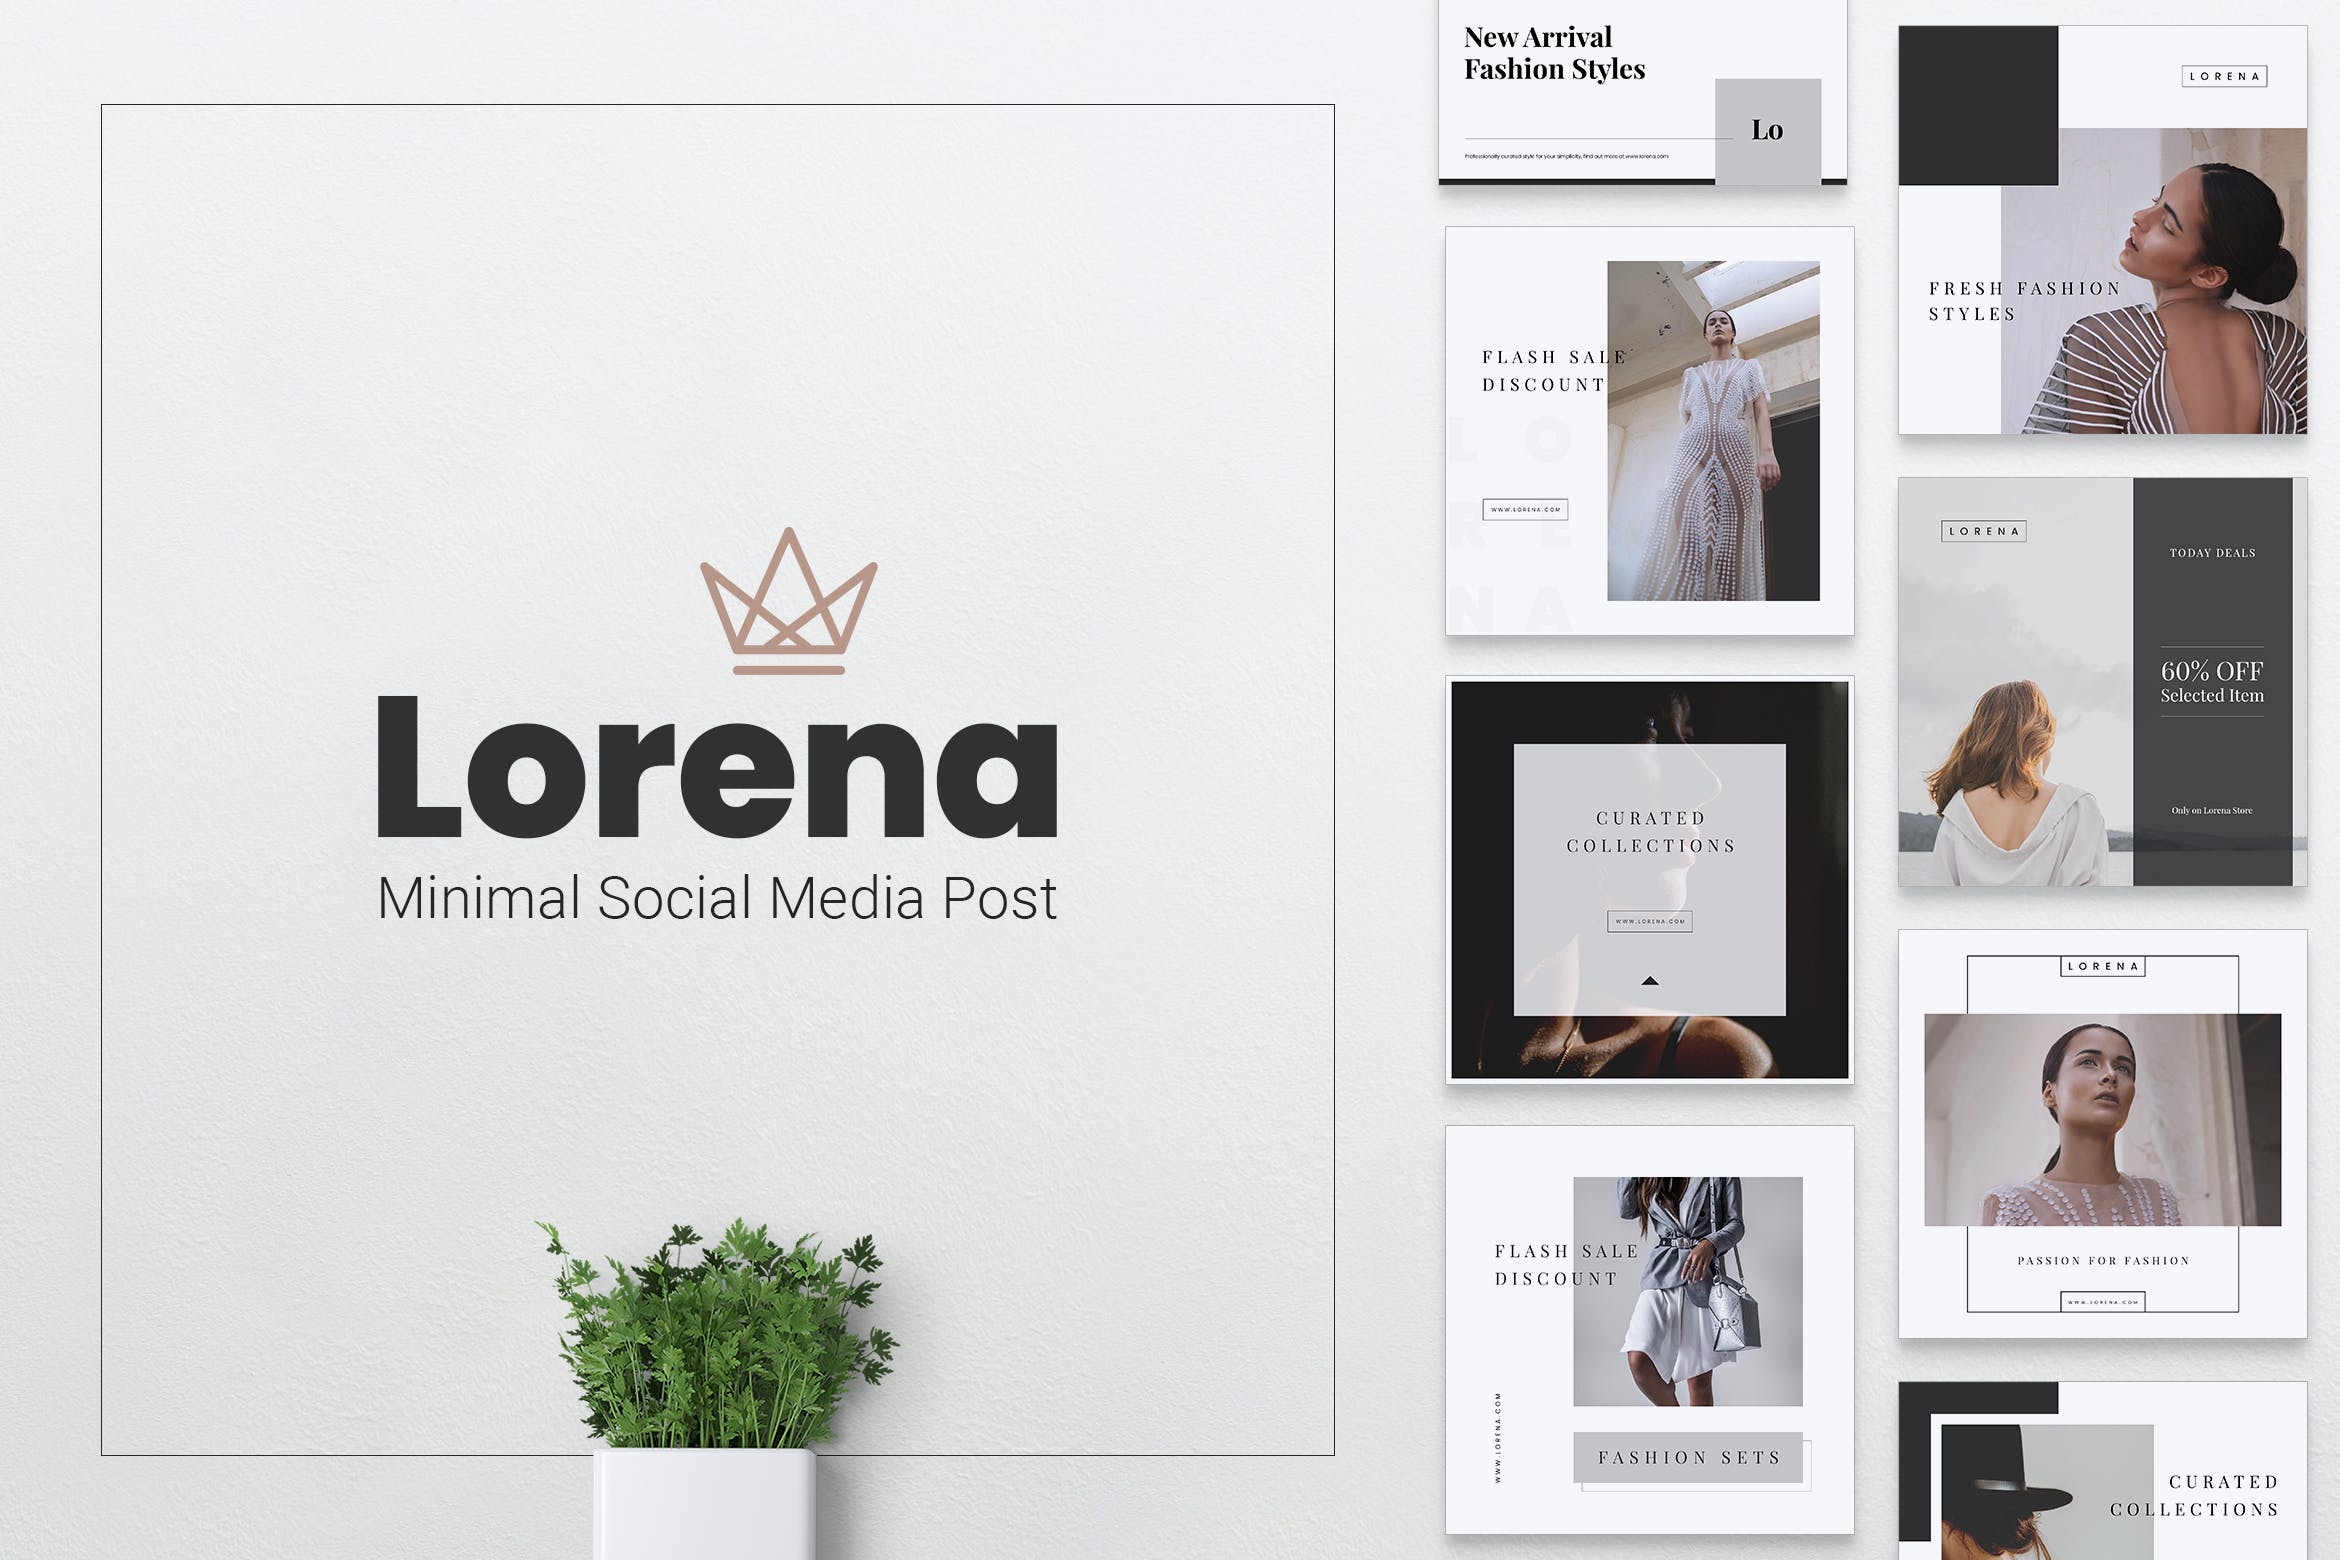 女性时尚品牌社交推广设计素材包 LORENA Fashion Social Media Post插图